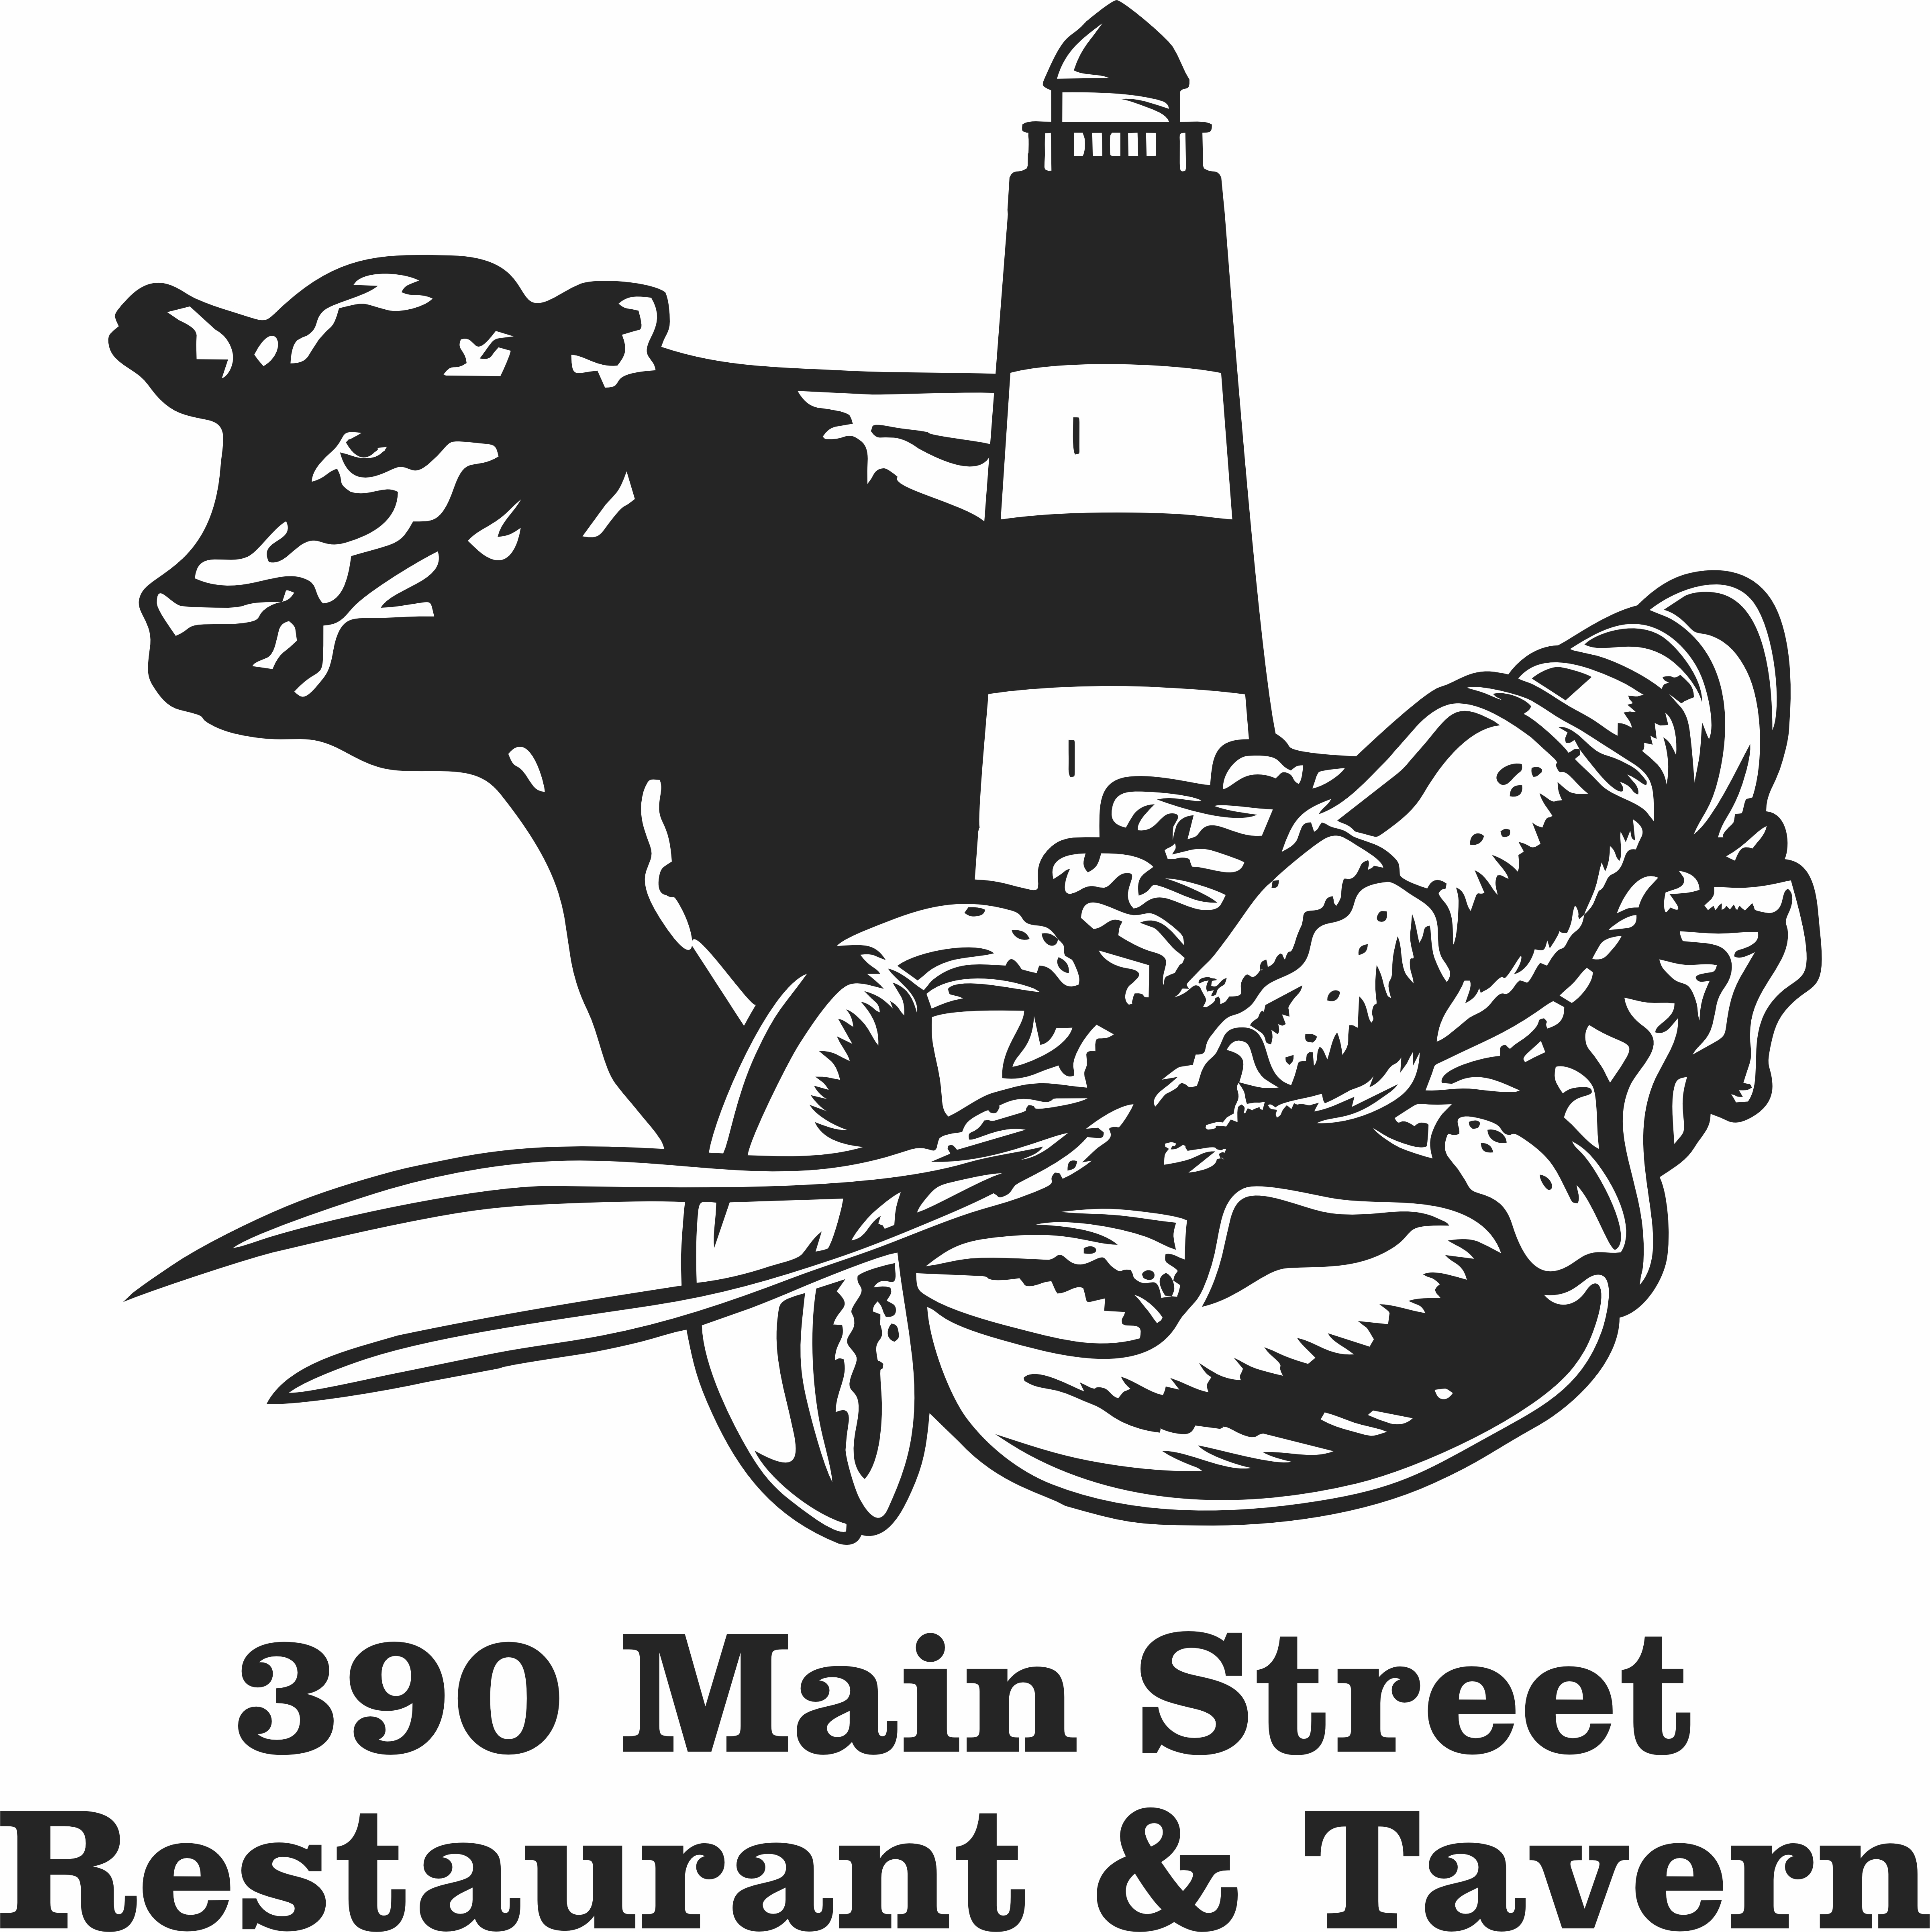 390 Main Street fka Ocean Gardens Restaurant and Tavern